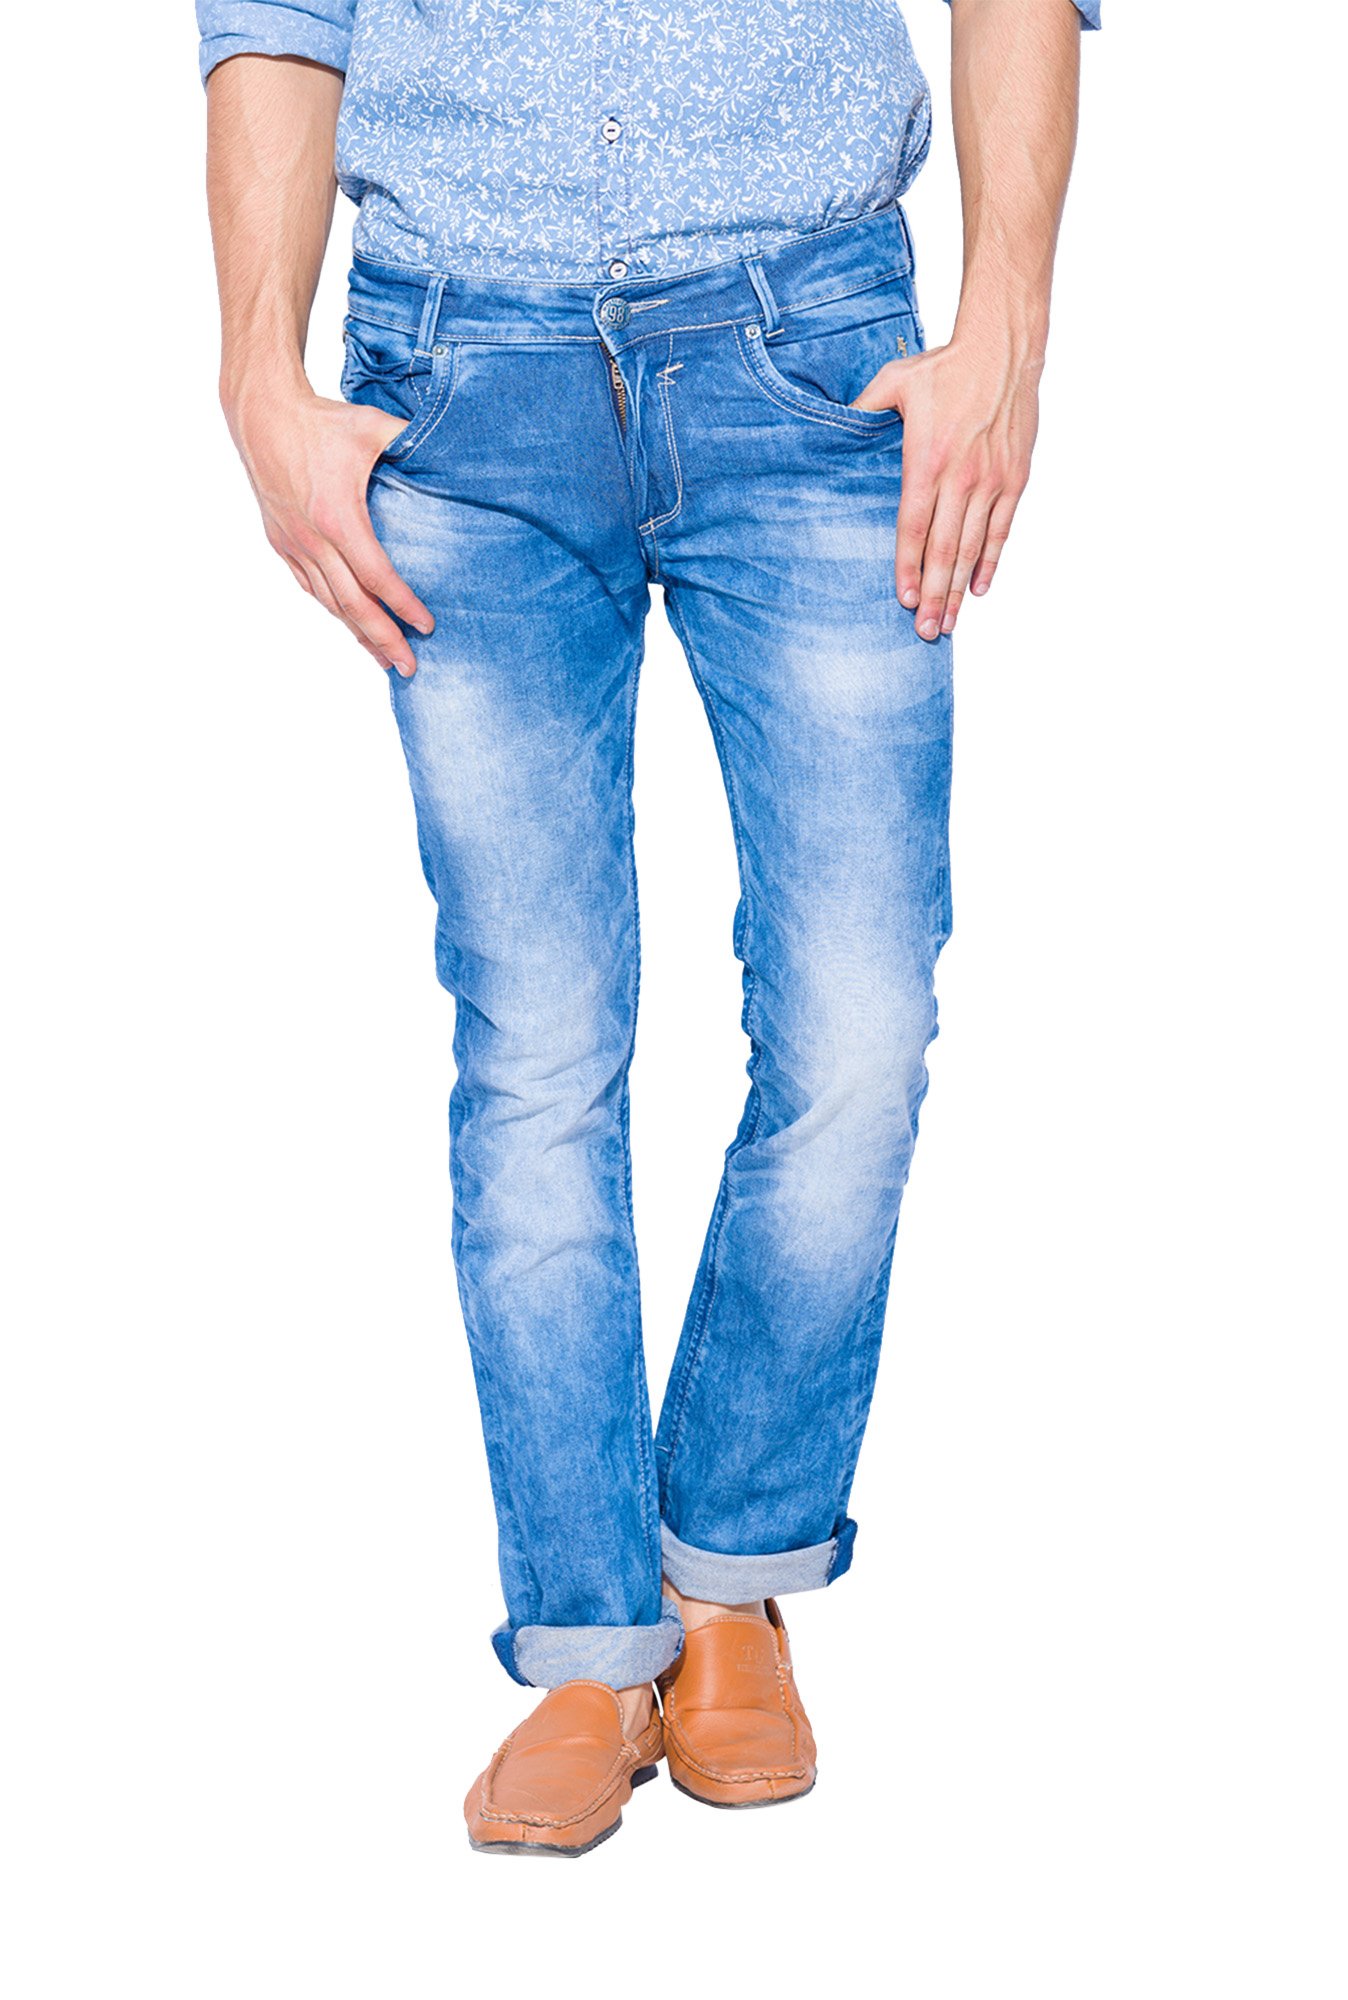 plac jeans price